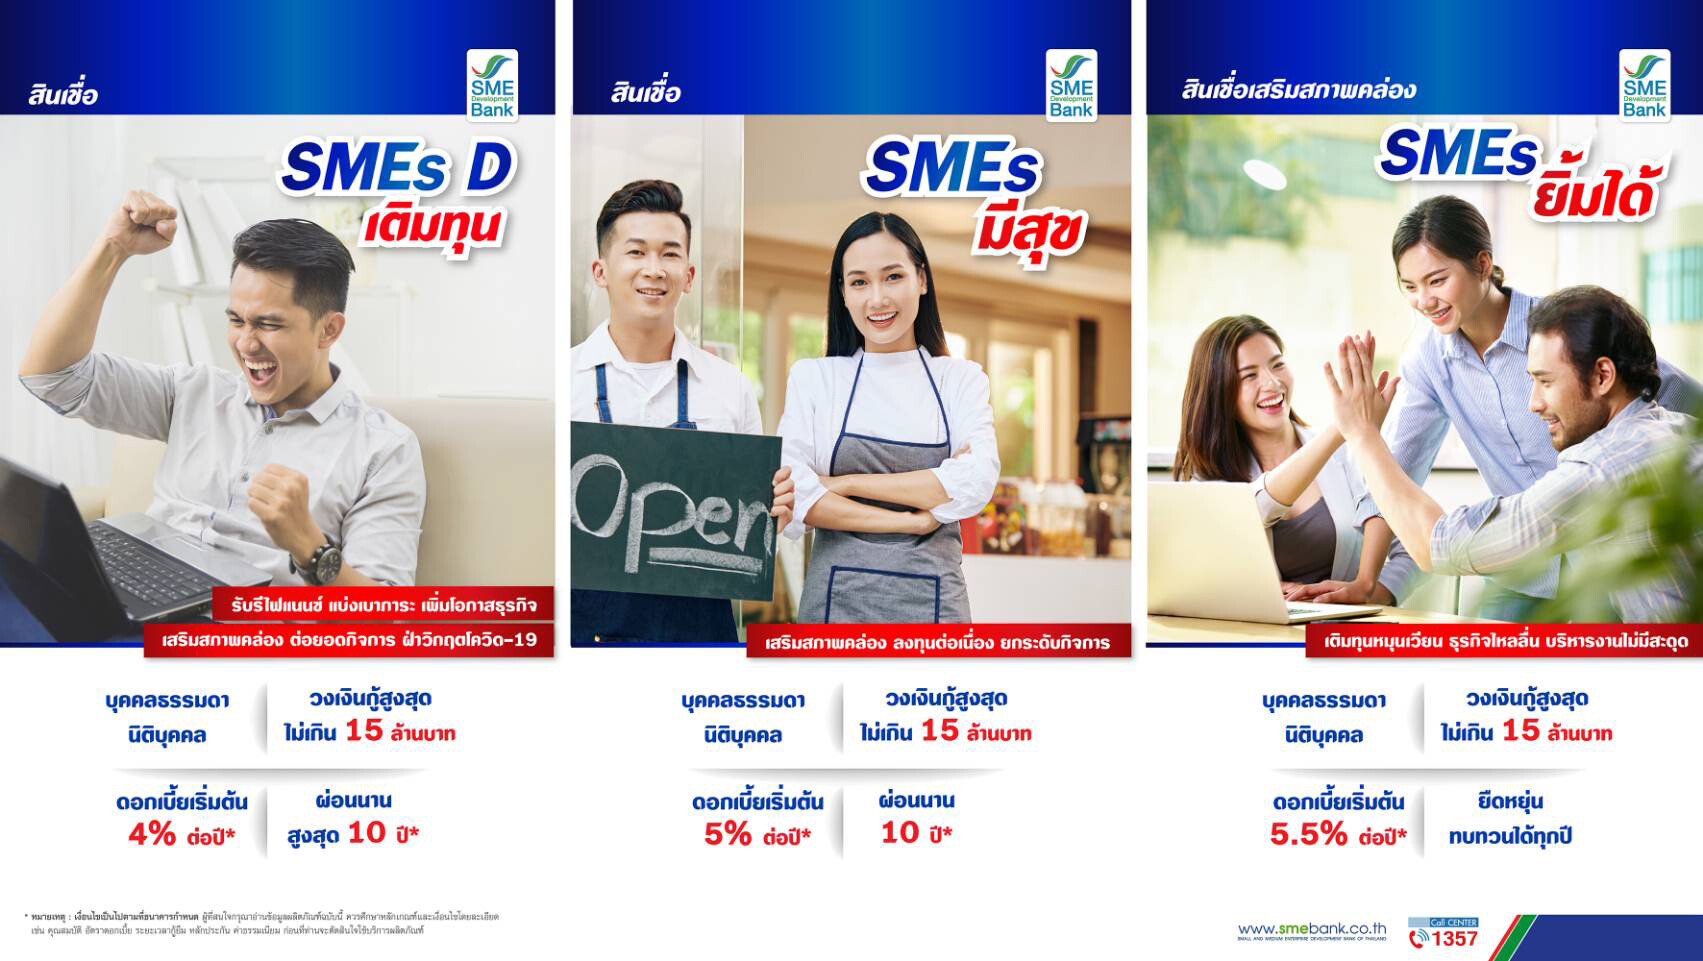 SME D Bank จัด 15,000 ลบ. คลอดแพคเกจสินเชื่อ 'เติมทุน SMEs มีสุข ยิ้มได้' กู้ได้สูงถึง 15 ลบ. ช่วยเอสเอ็มอีทุกธุรกิจ เสริมสภาพคล่อง ลดต้นทุนการเงิน